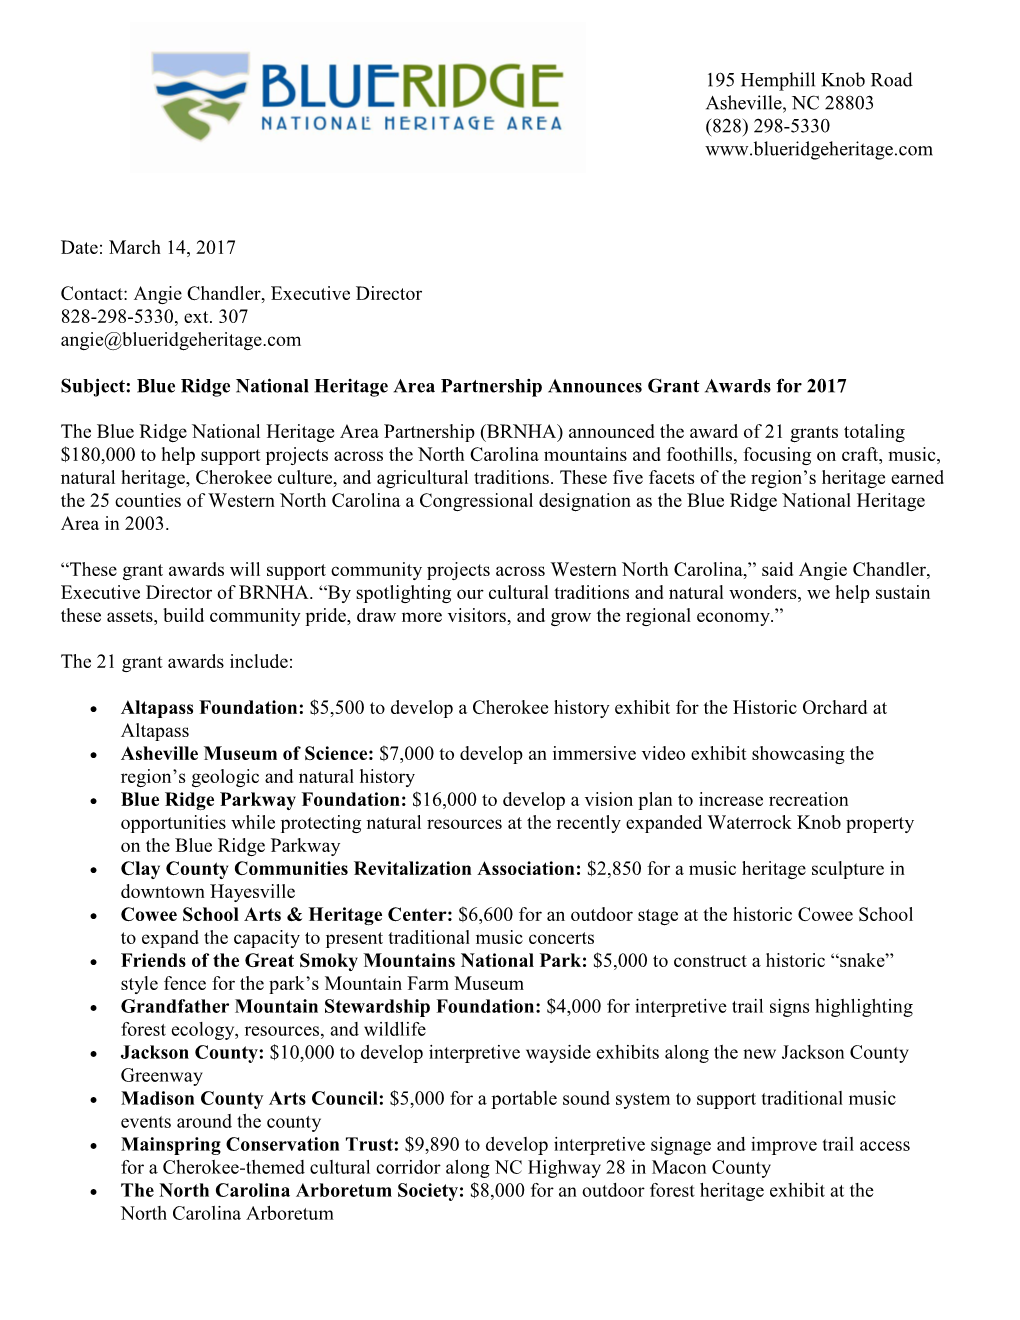 Blue Ridge National Heritage Area Partnership Announces Grant Awards for 2017